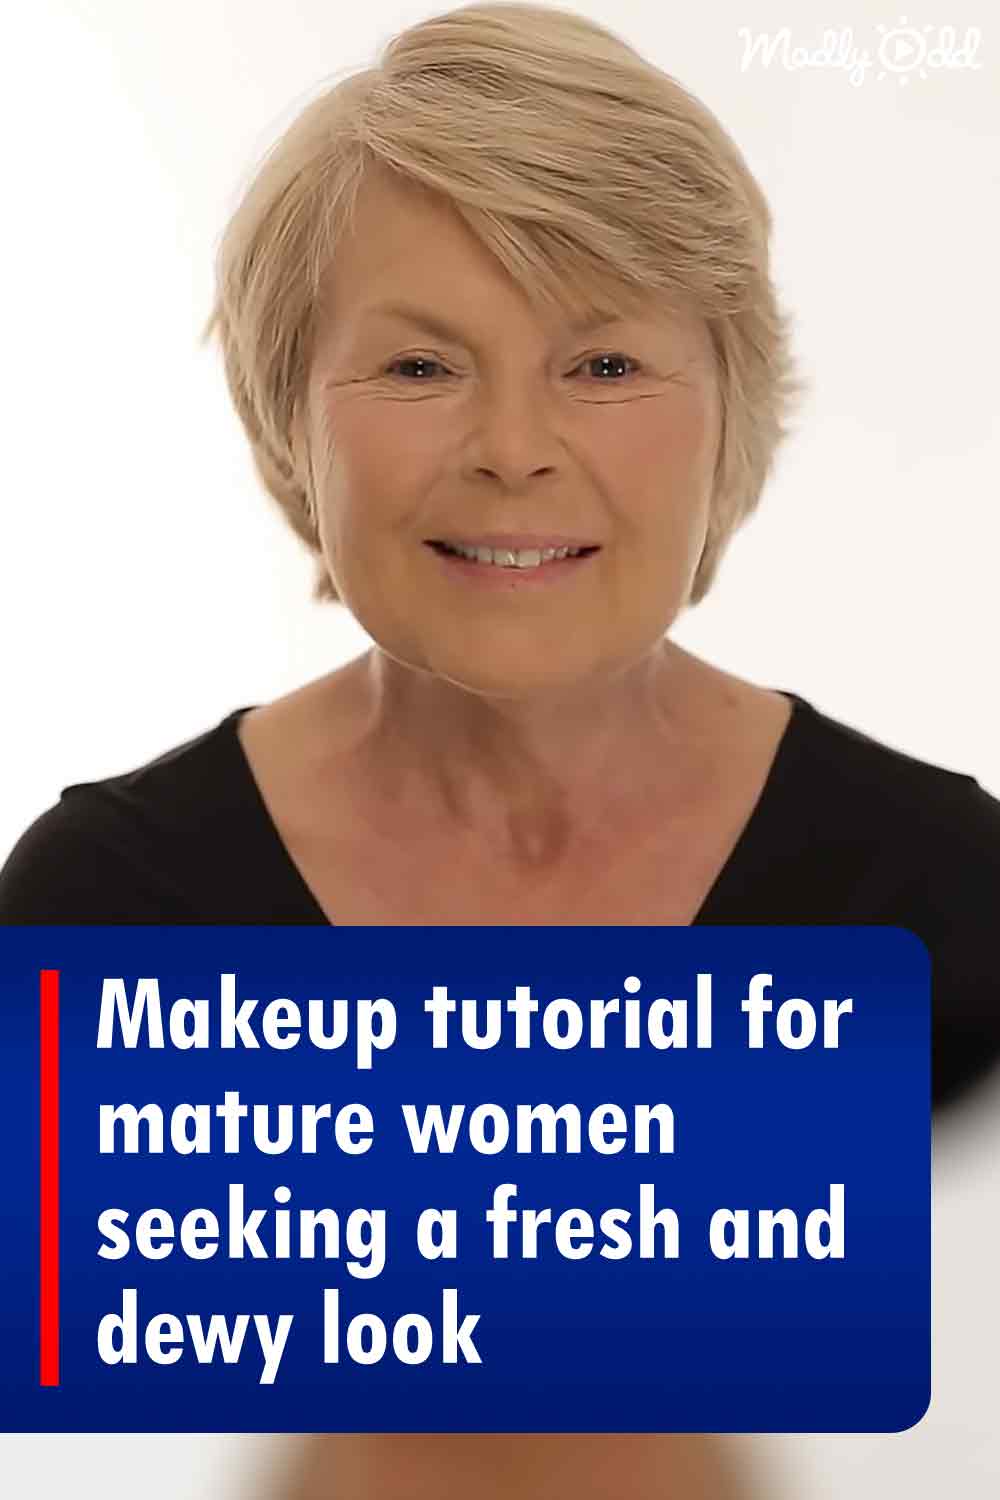 Makeup tutorial for mature women seeking a fresh and dewy look